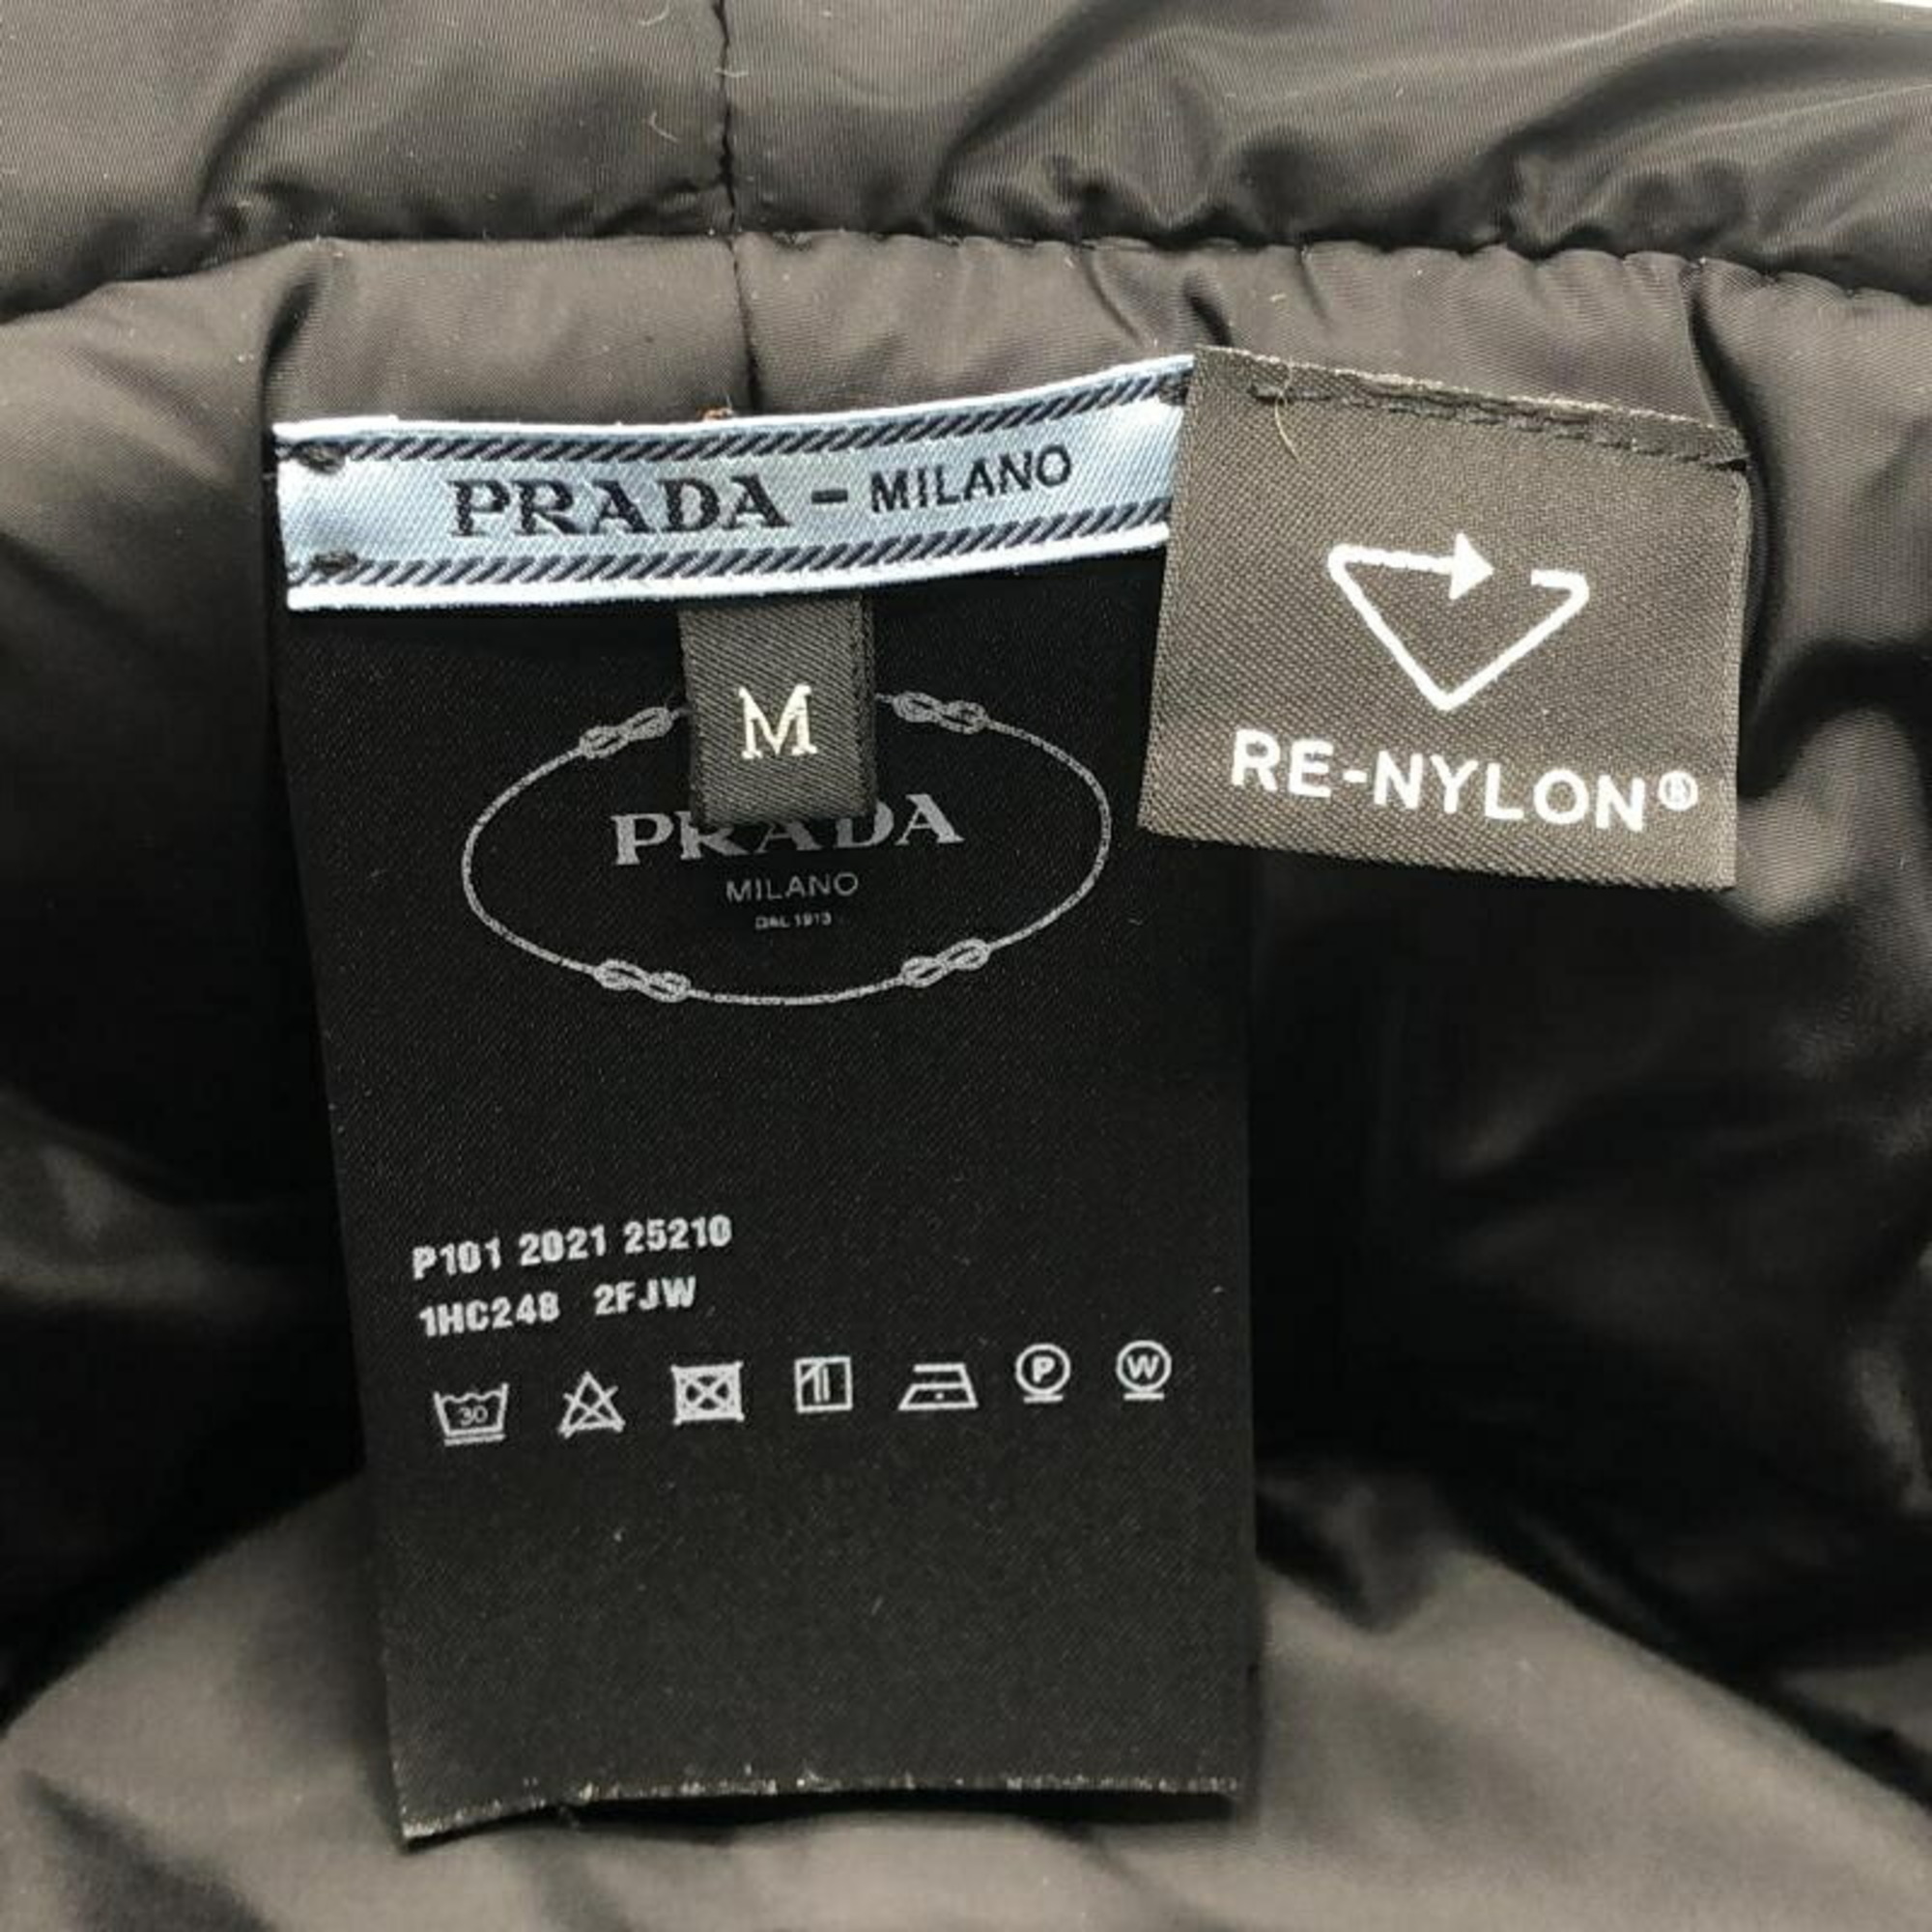 PRADA Re-Nylon Hat M 1HC248 Black Prada